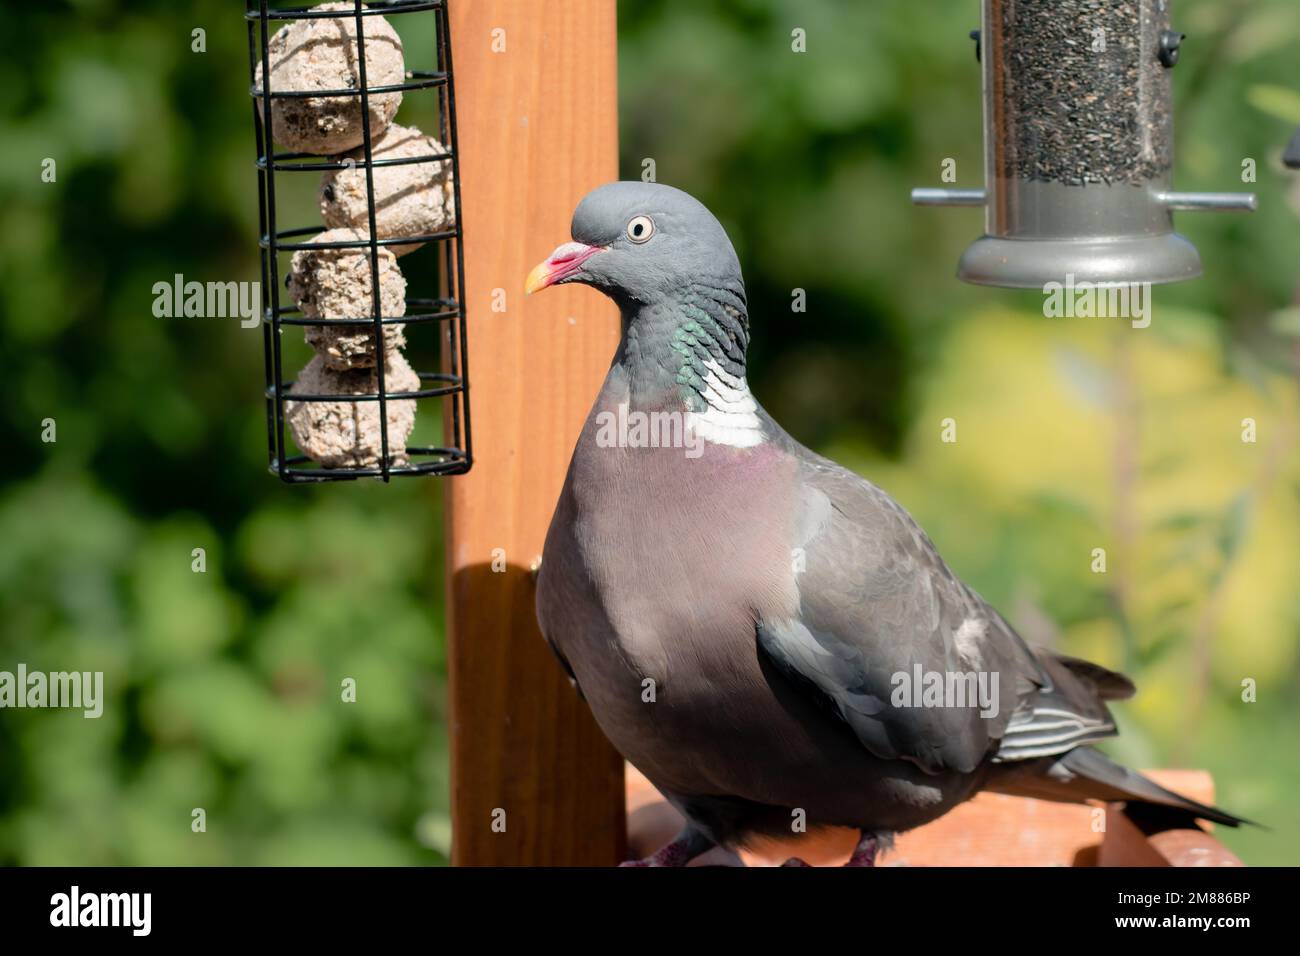 Wood pigeon in domestic garden on bird feeder eating suet fat balls Stock Photo